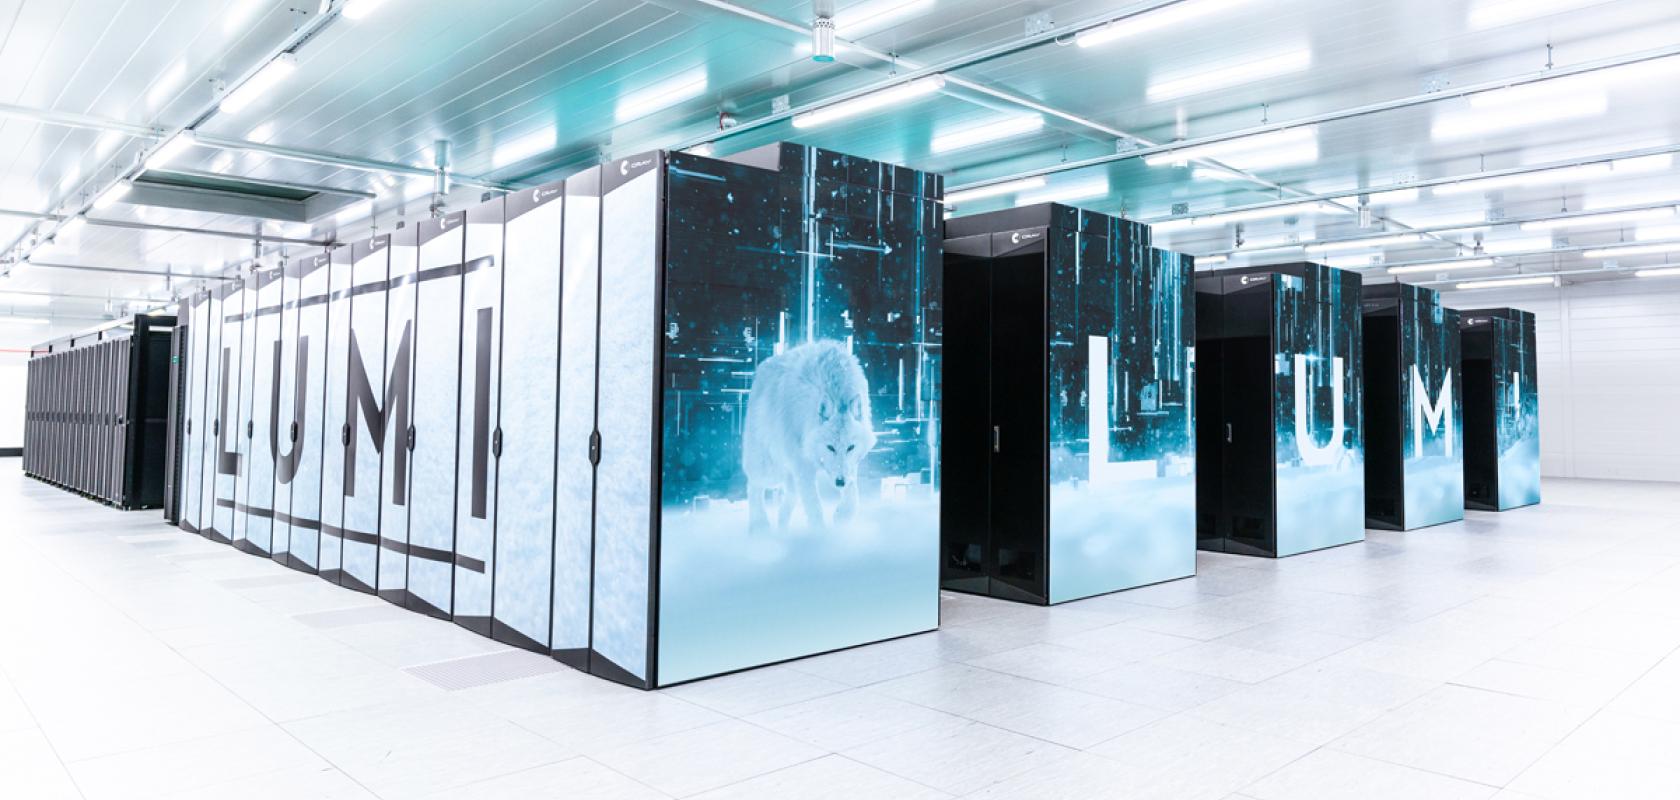 LUMI supercomputer